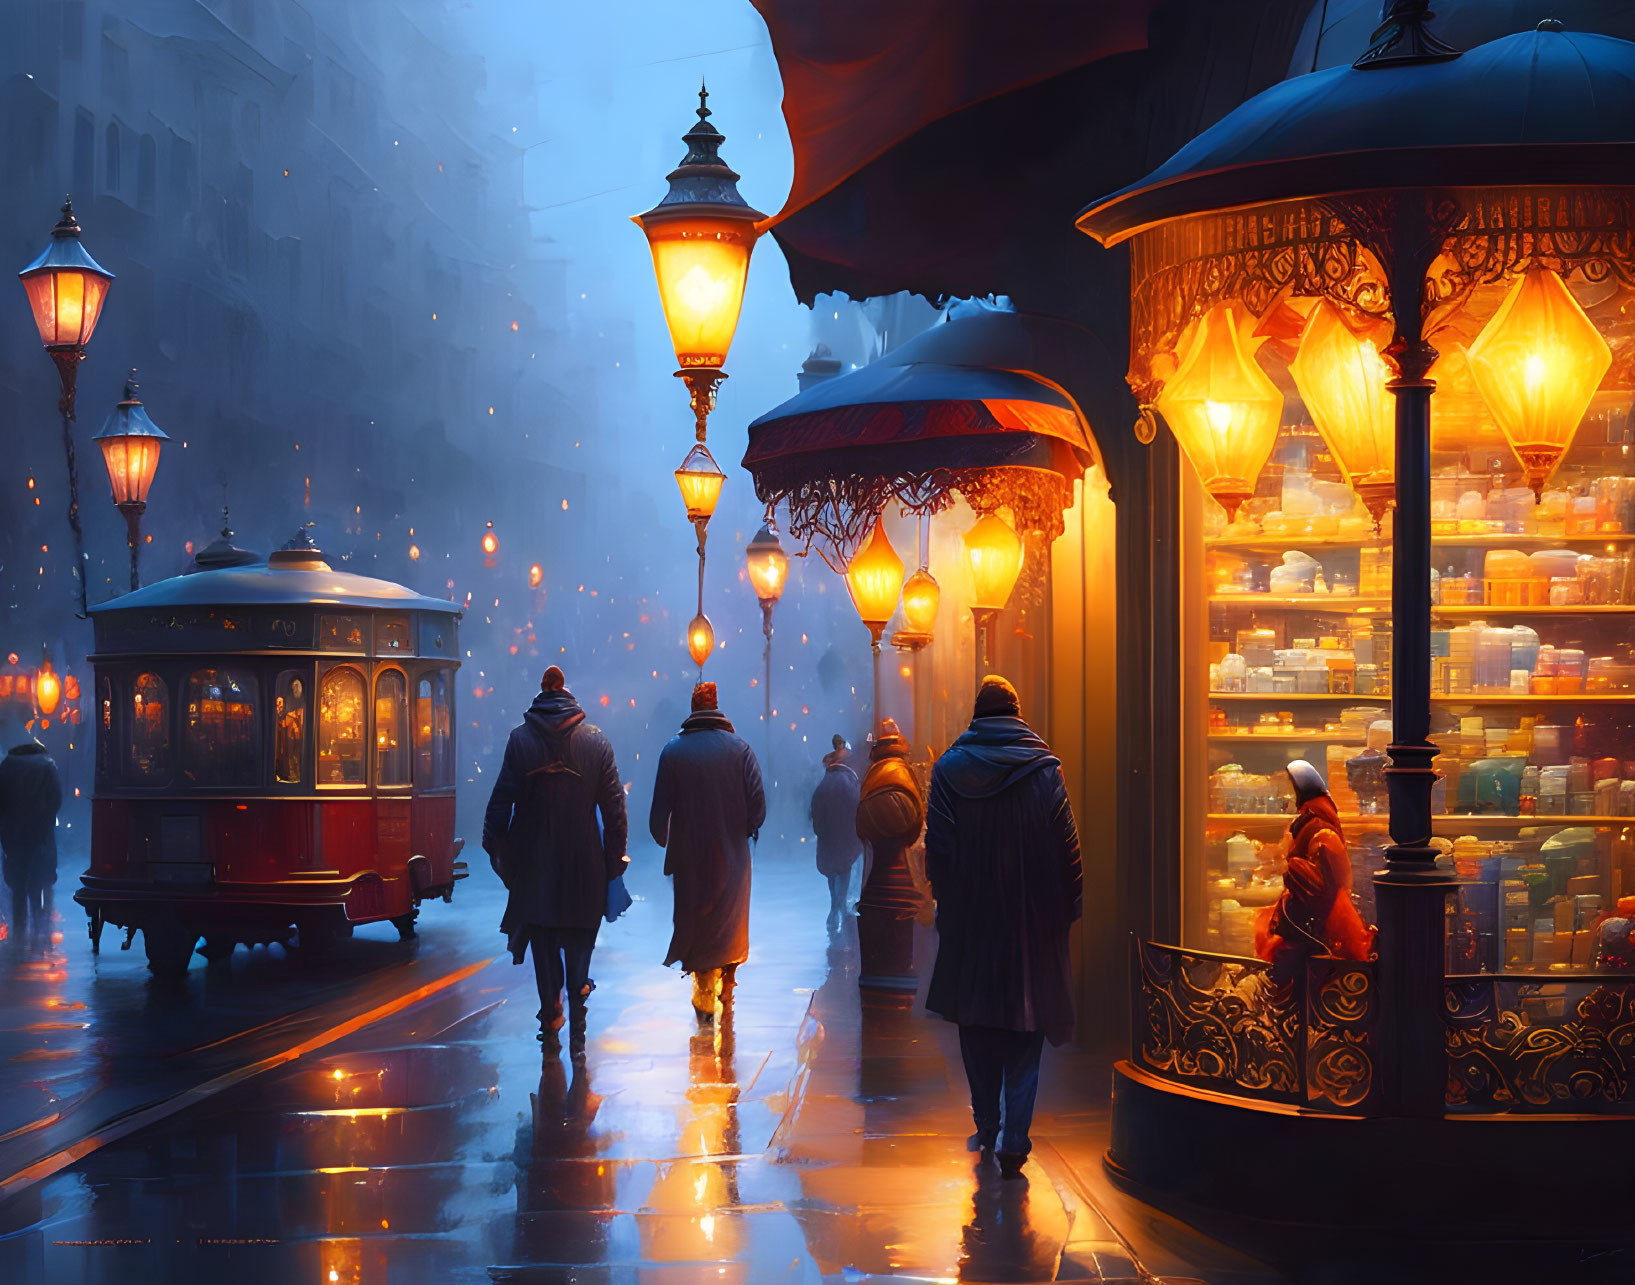 Vintage tram and pedestrians under glowing lamps in rainy street scene